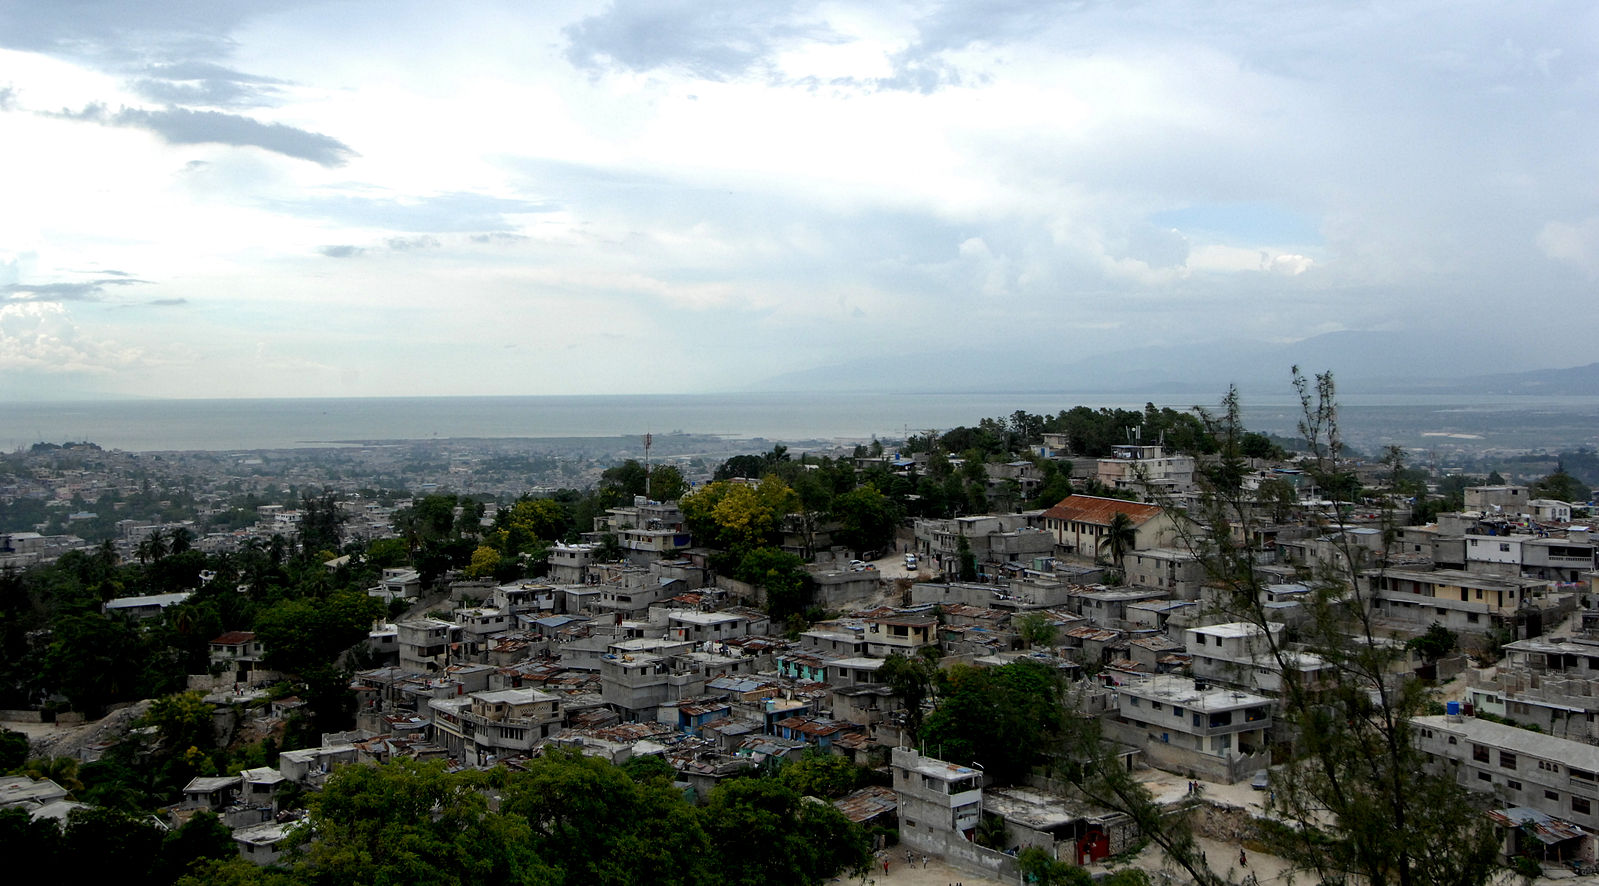 Port-au-Prince, Haiti. Source: https://commons.wikimedia.org